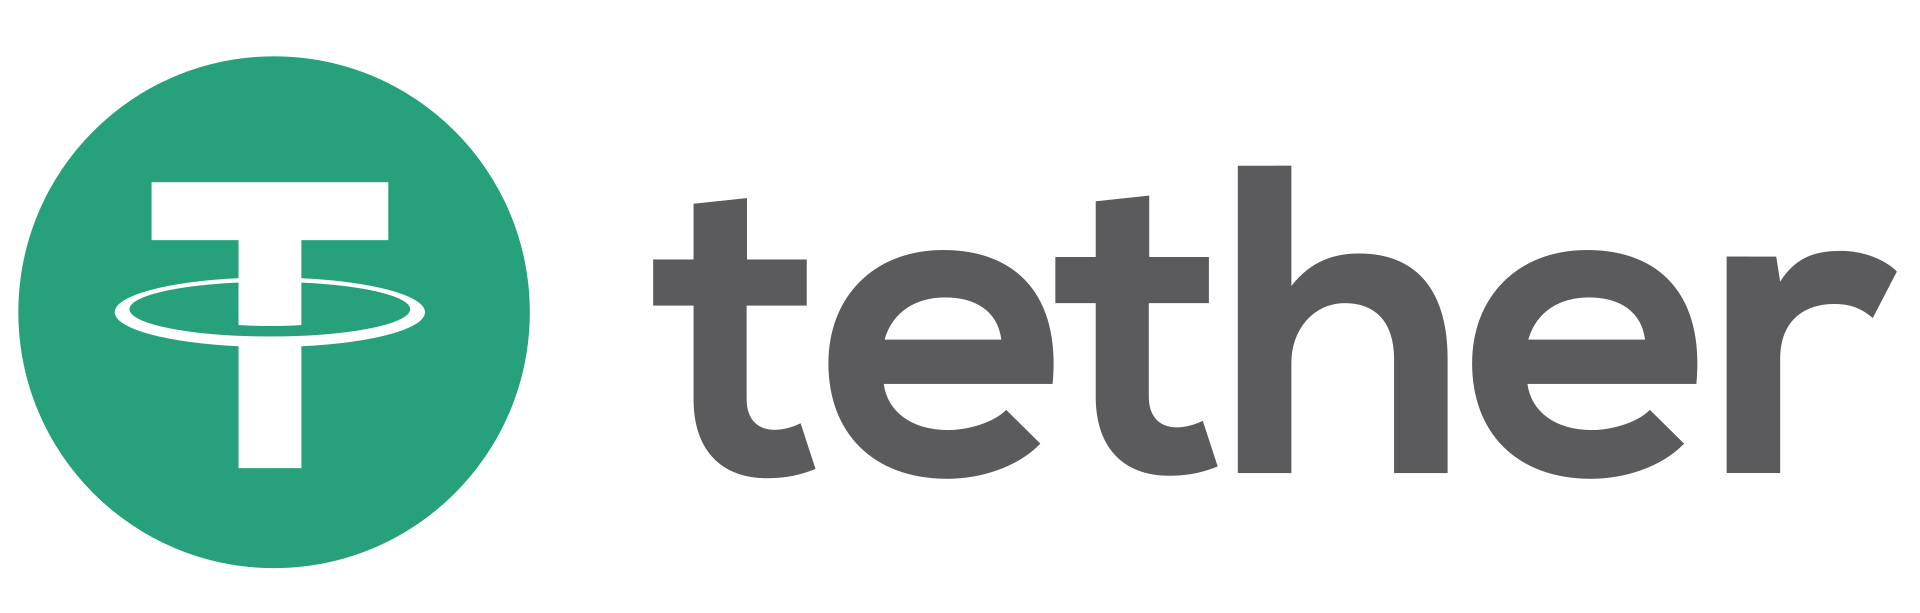 Tether Logo Image